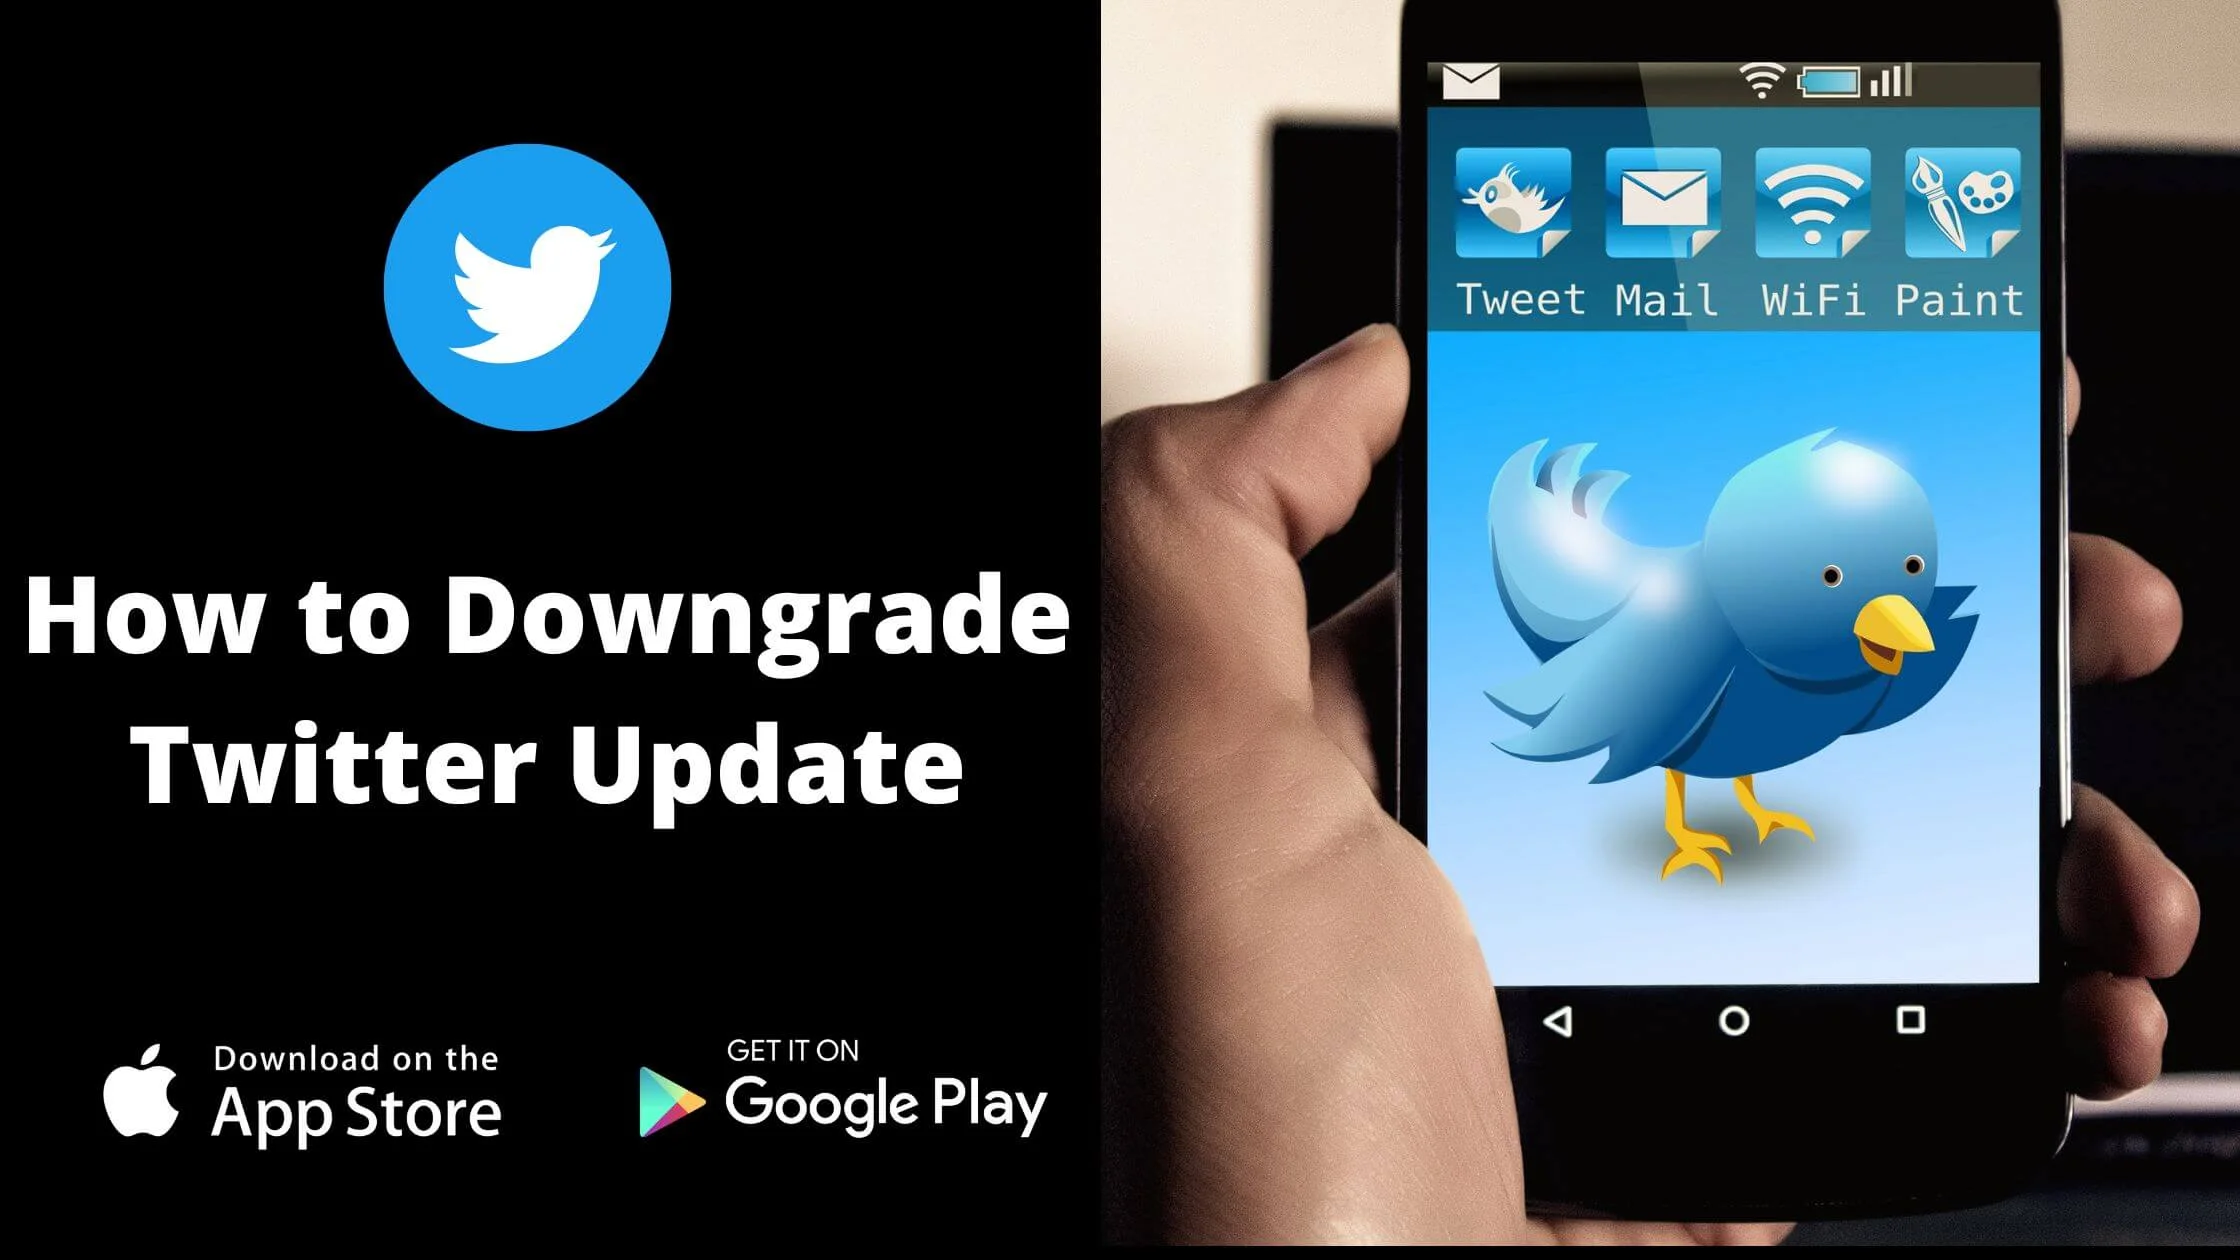 Downgrade Twitter Update